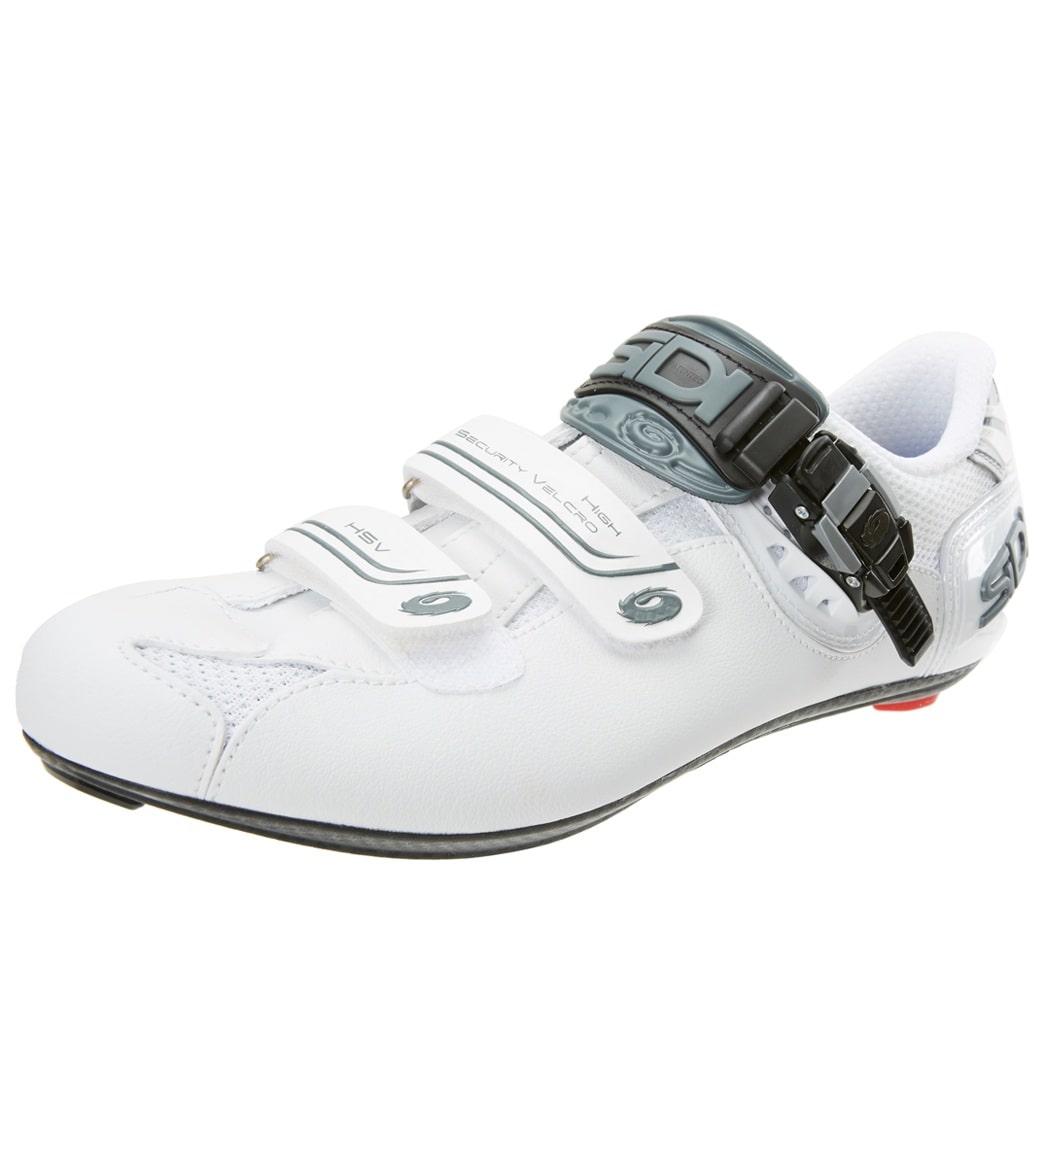 Sidi Men's Genius Shadow Cycling Shoe Classic Fit - White/White 42 - Swimoutlet.com